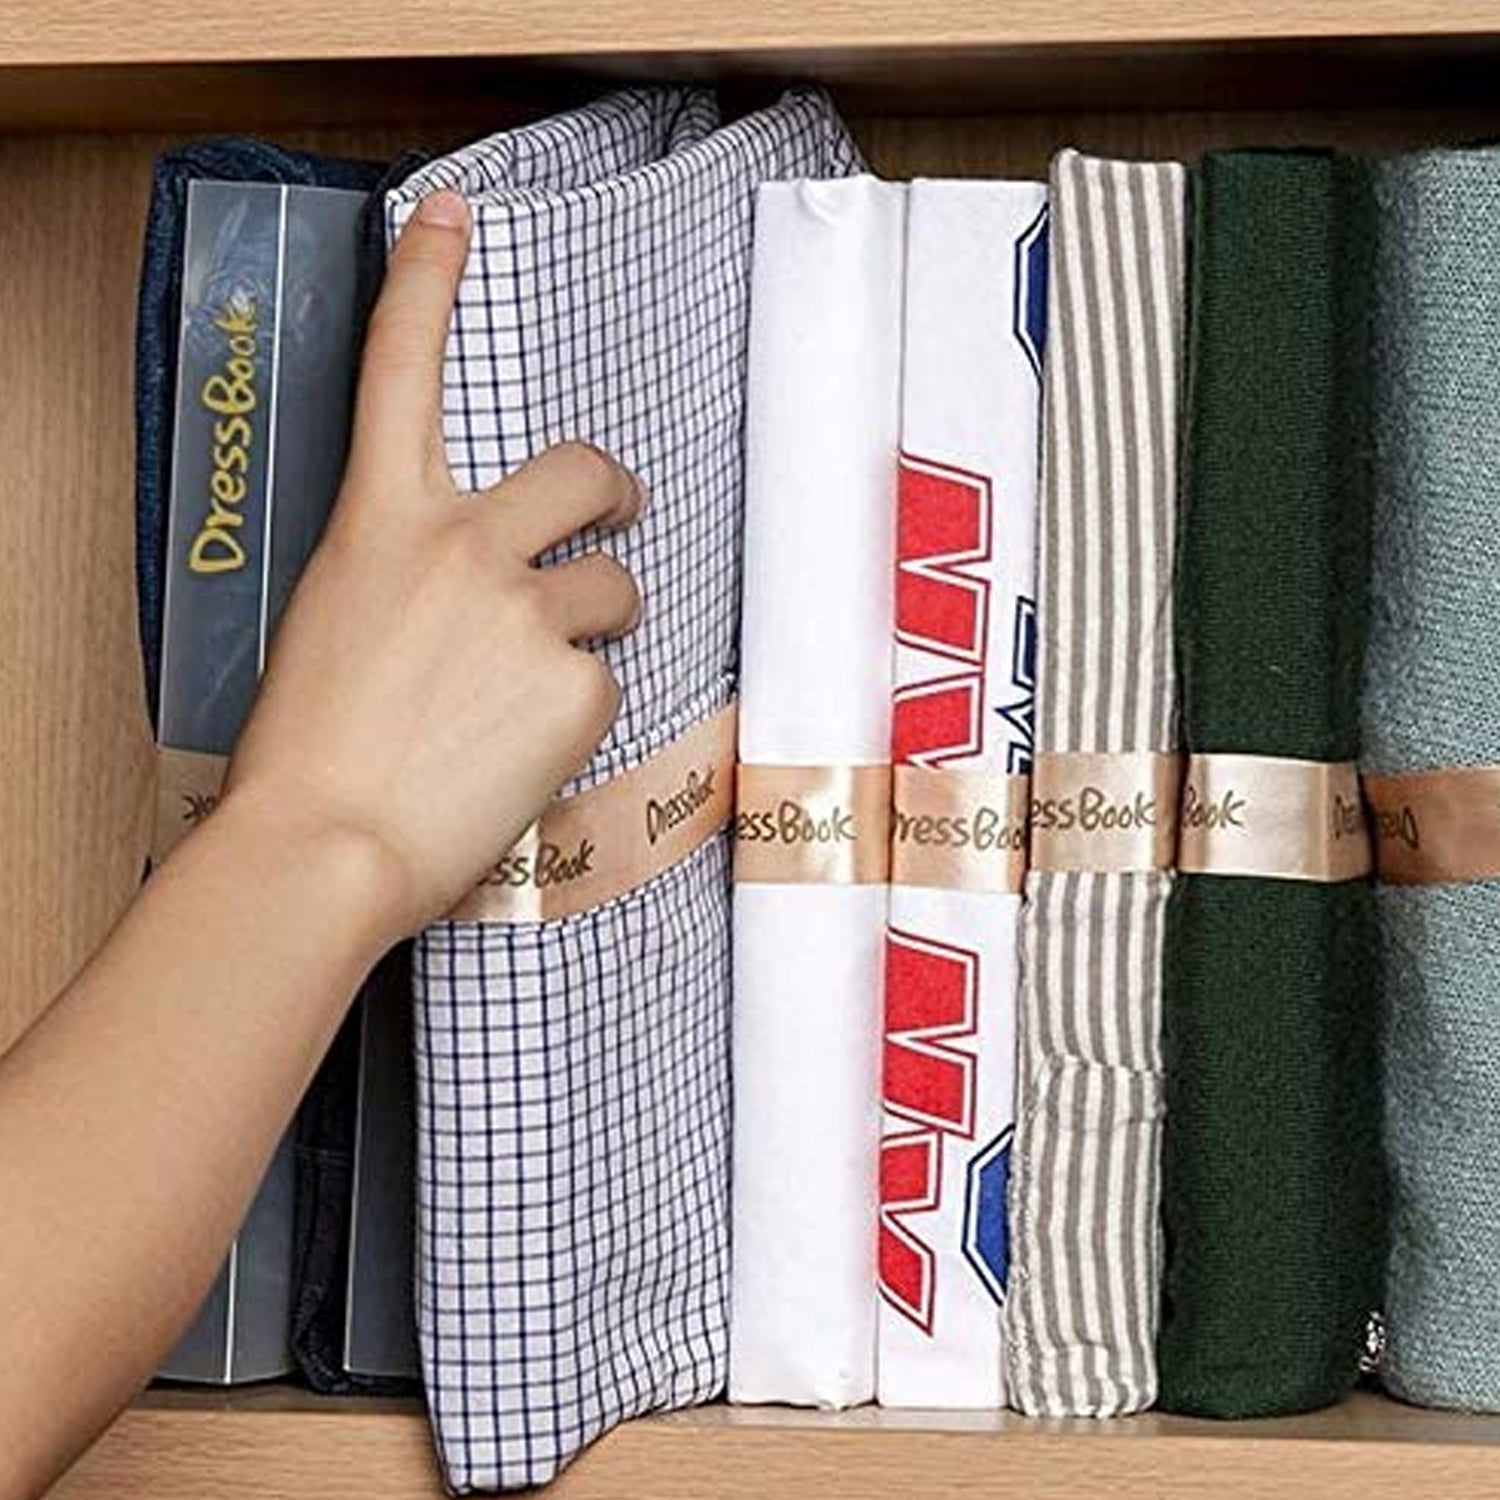 4026A DressBook Foldable Clothes T-Shirt Closet Organizer FOLDING BOARD CLOTHES FOLDER STORAGE ORGANIZER ( 10 PCS ) DeoDap